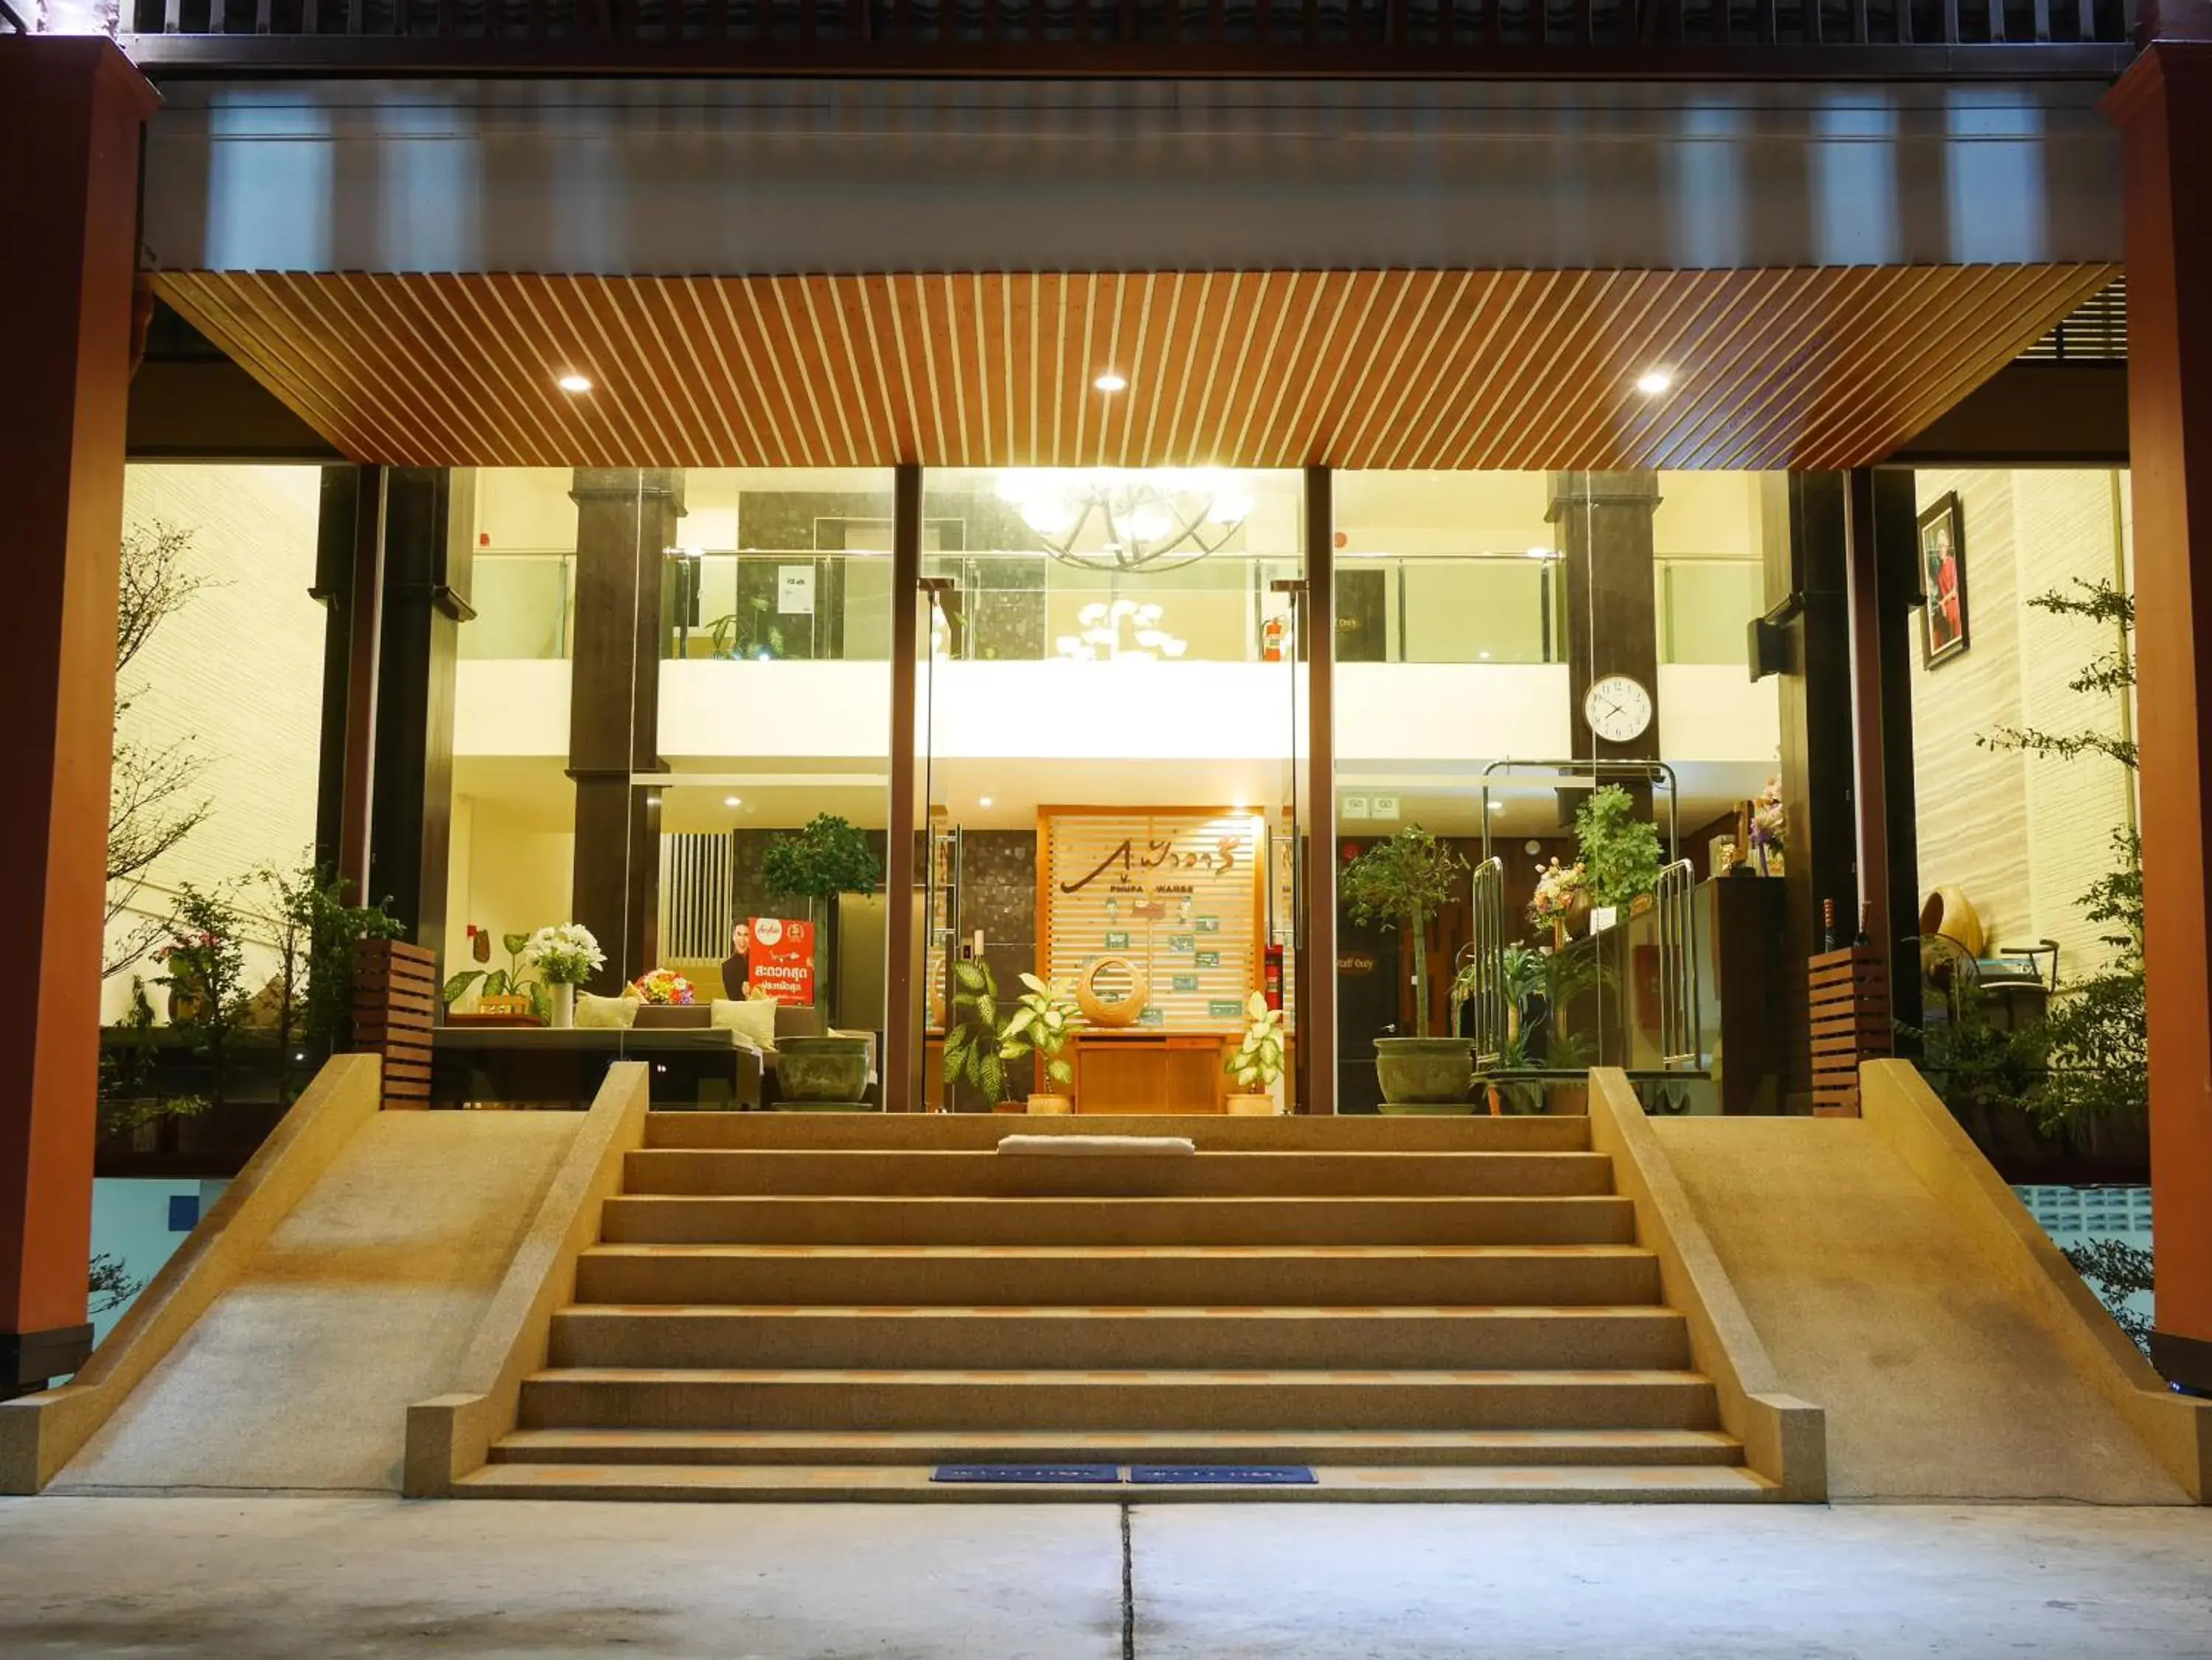 Lobby or reception in Phufa Waree Chiangrai Resort - SHA Extra Plus